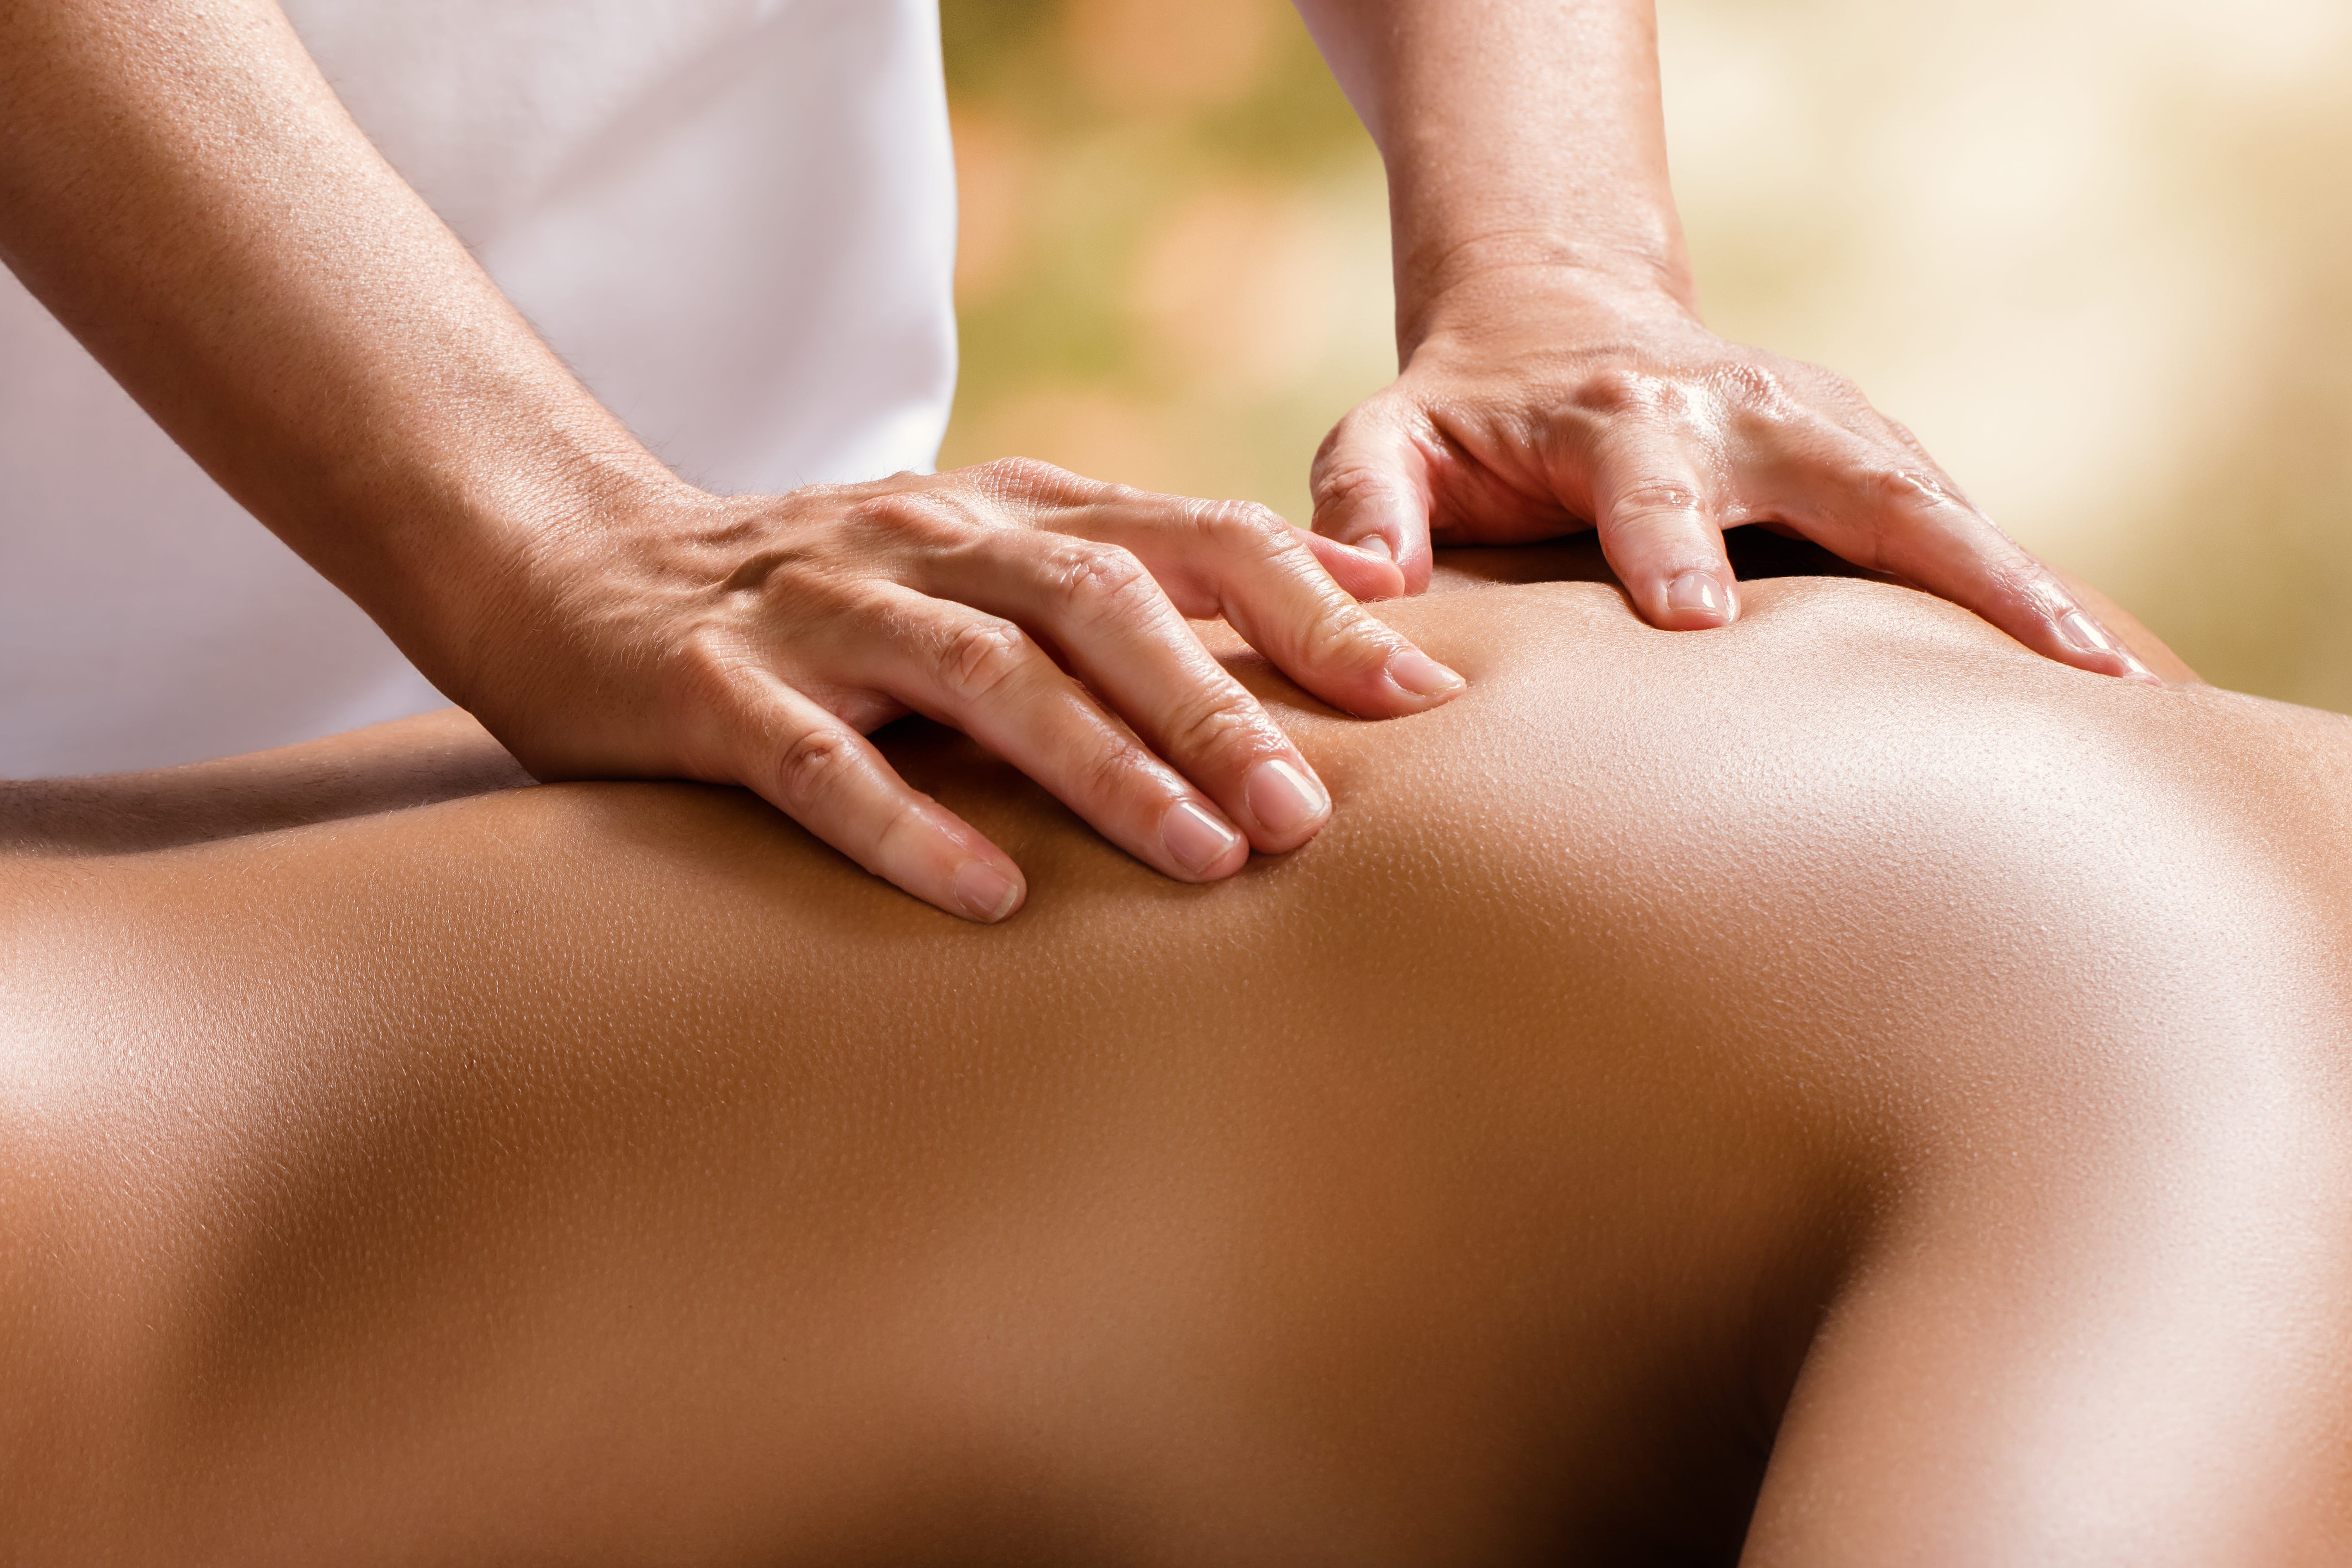 Tracking Arizona massage therapists accused of sexual misconduct